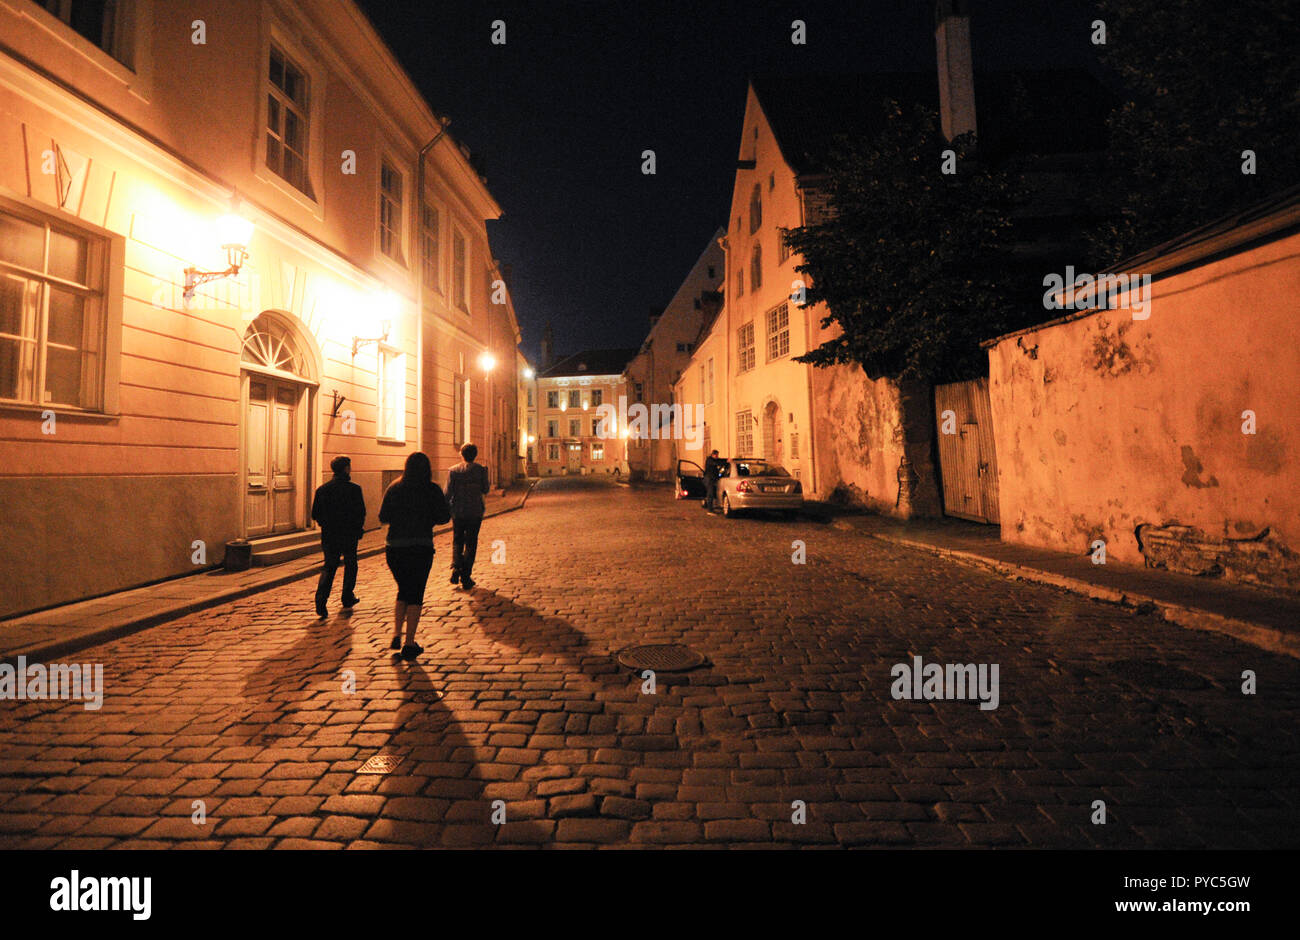 Tallinn old town narrow streets, Estonia Stock Photo